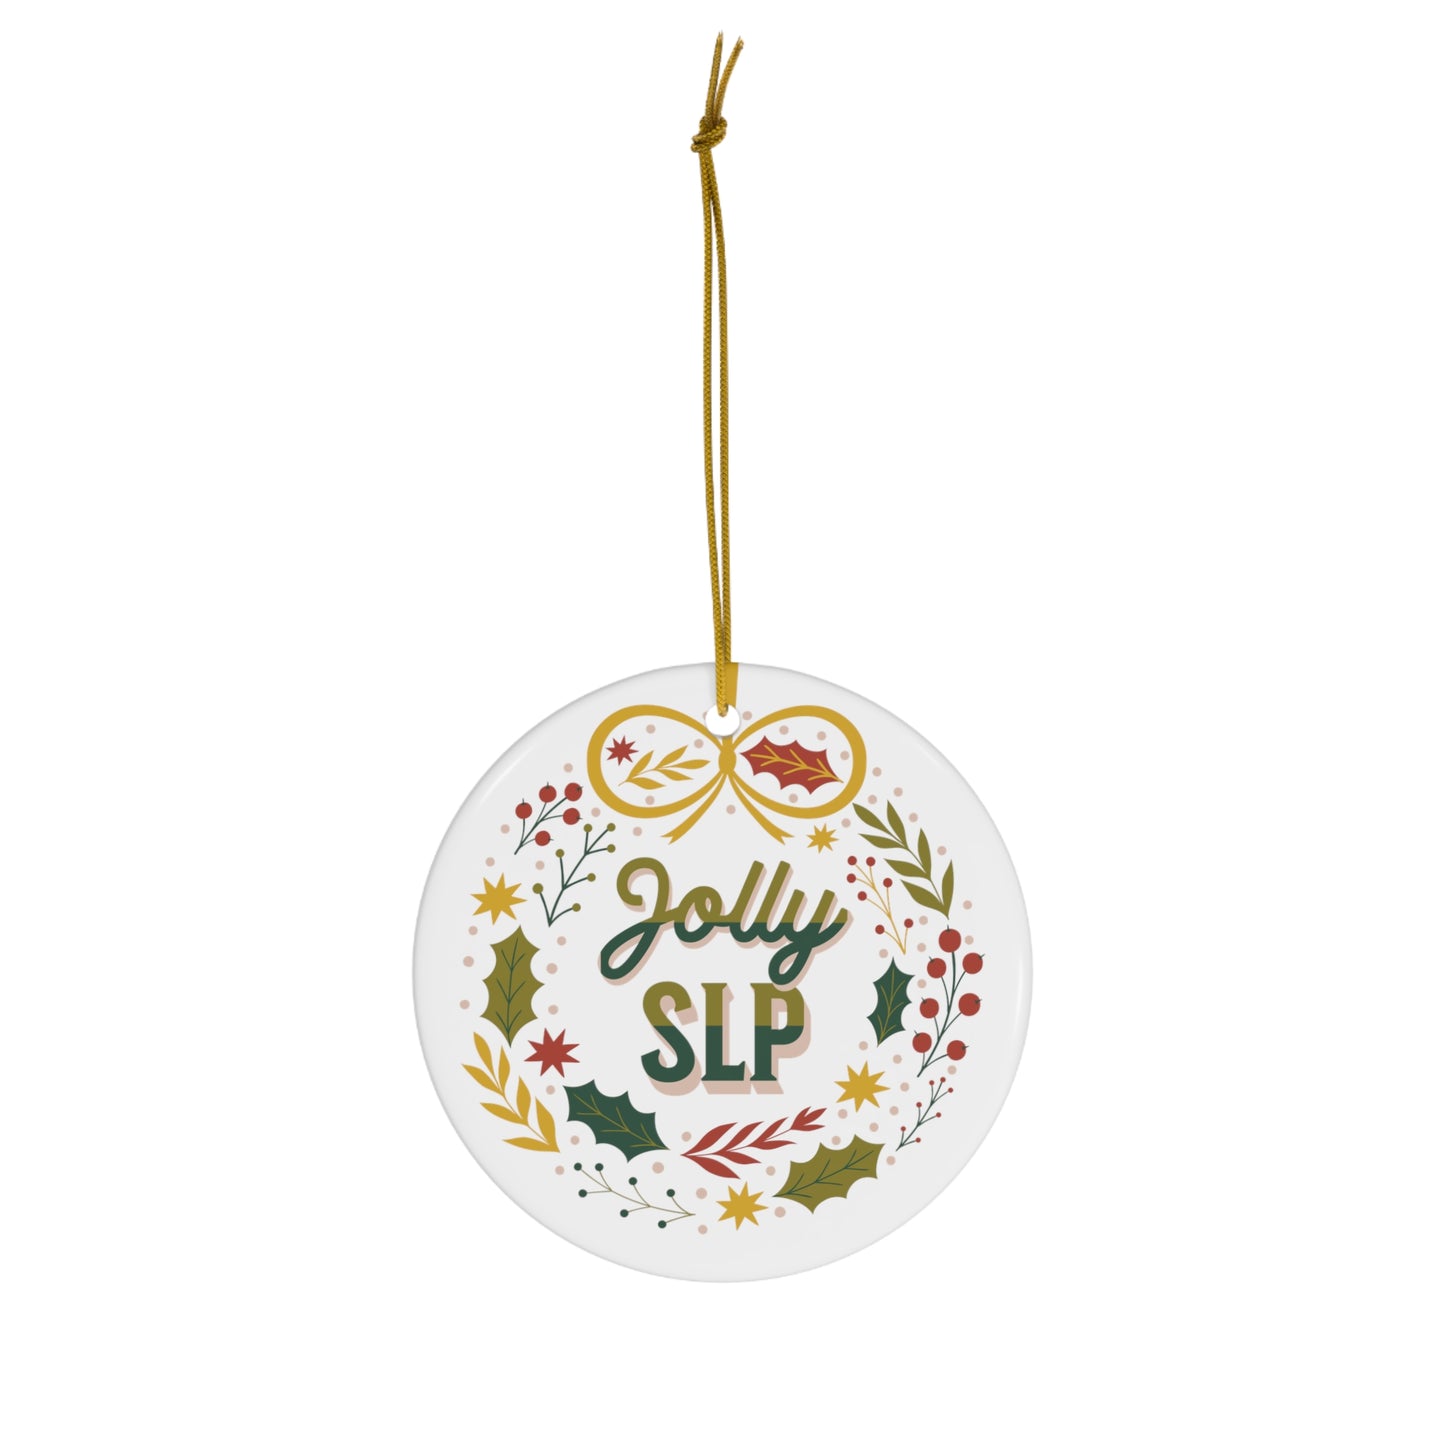 Jolly SLP Christmas Ornament - 4 Material Options